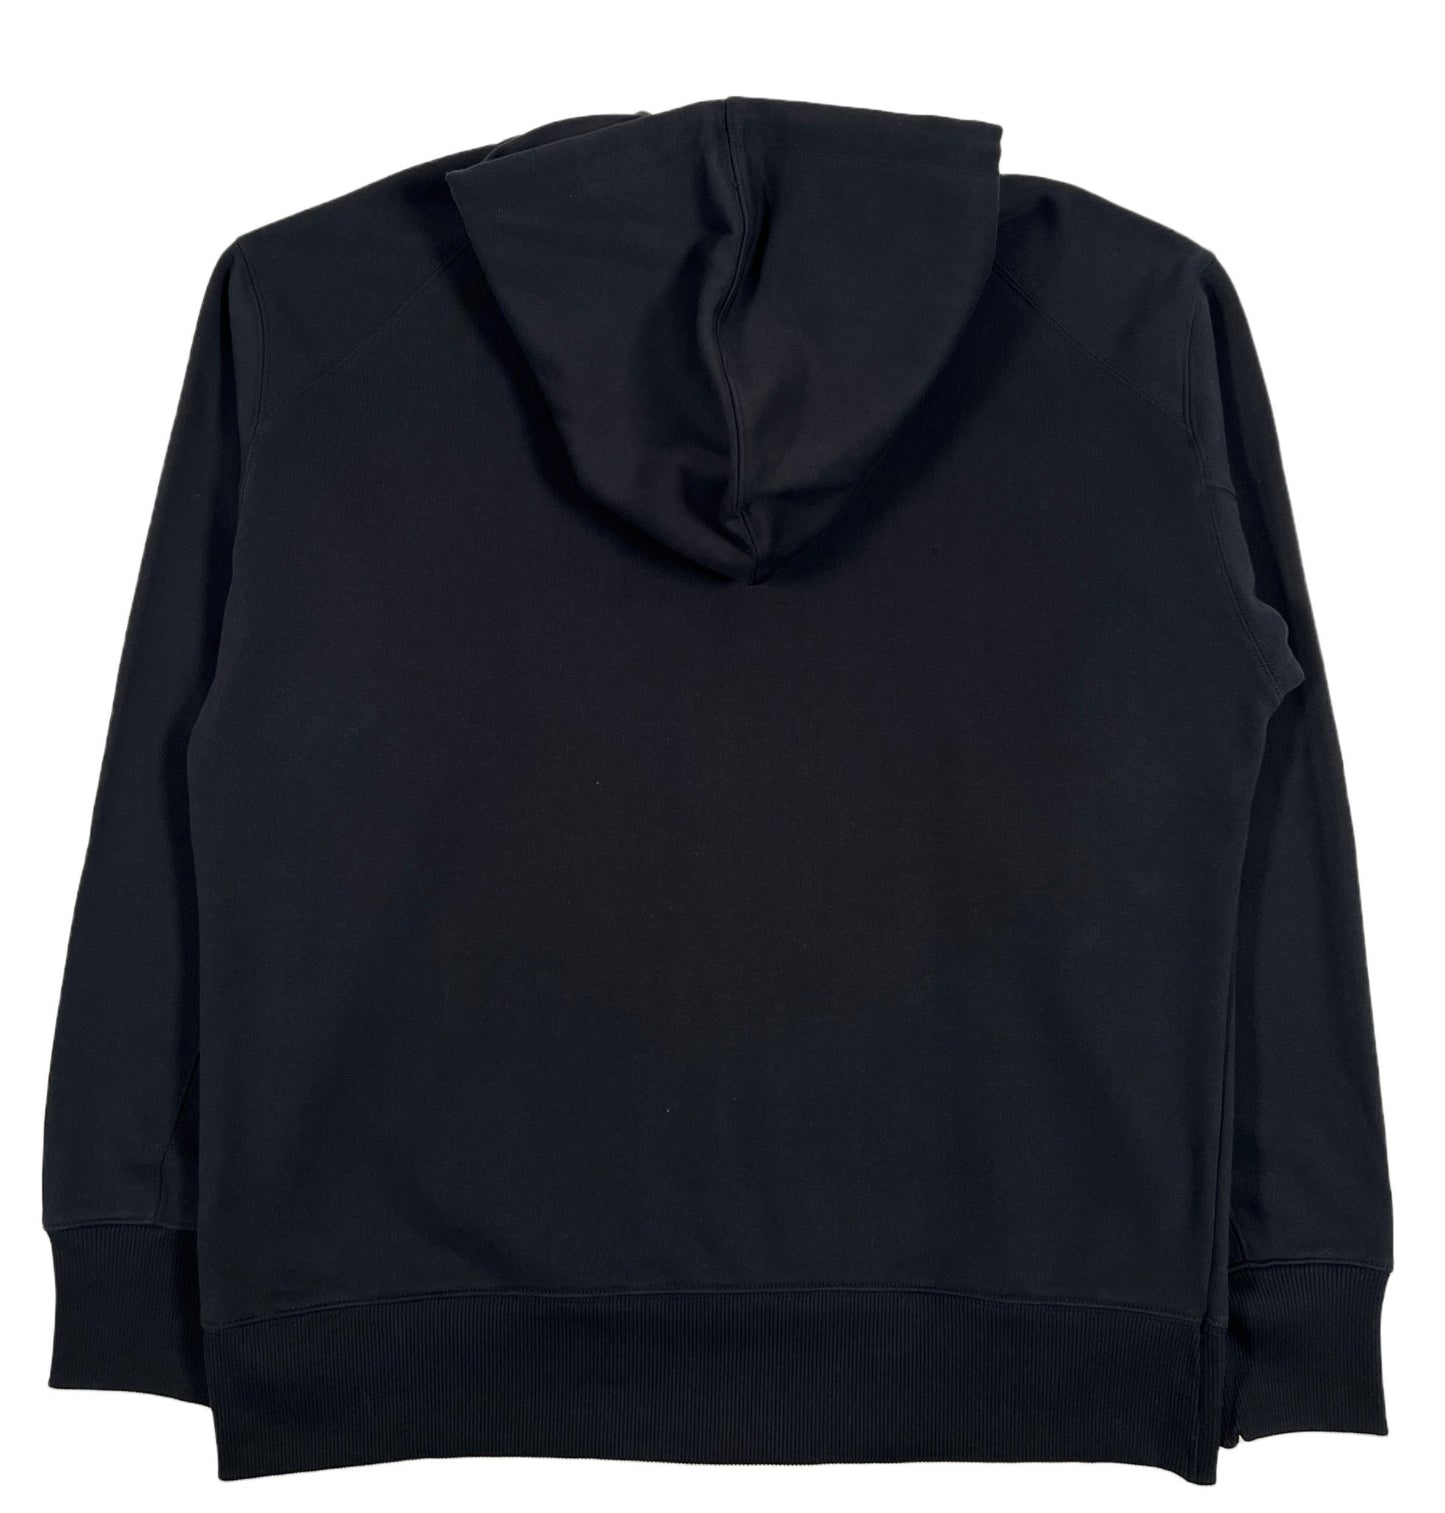 The back of a black ADIDAS x Y-3 logo hooded sweatshirt (Y-3 HOODIE IP5580 GFX FT FZ HOOD BLACK).